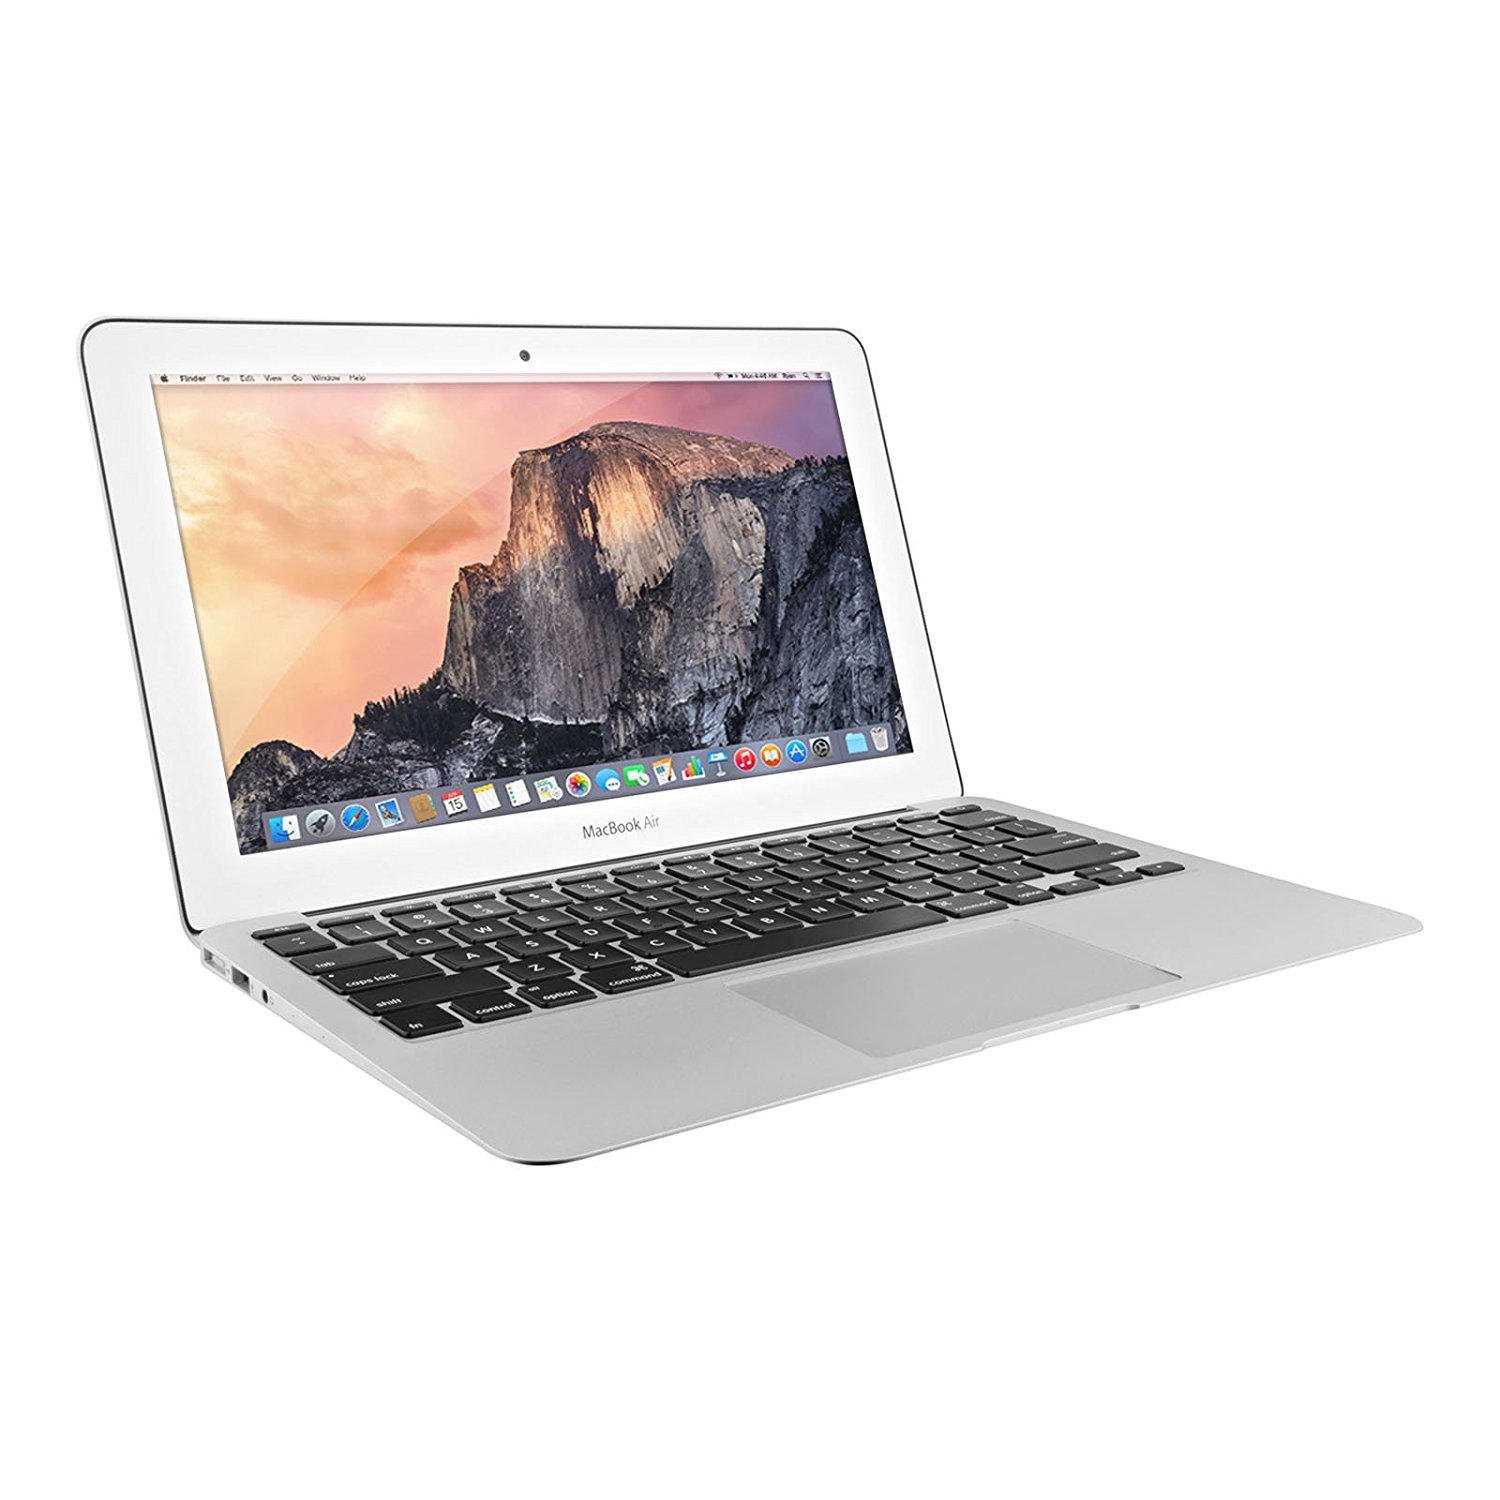 MacBook Air 11 inch Core i7 1.8GHz July 2011